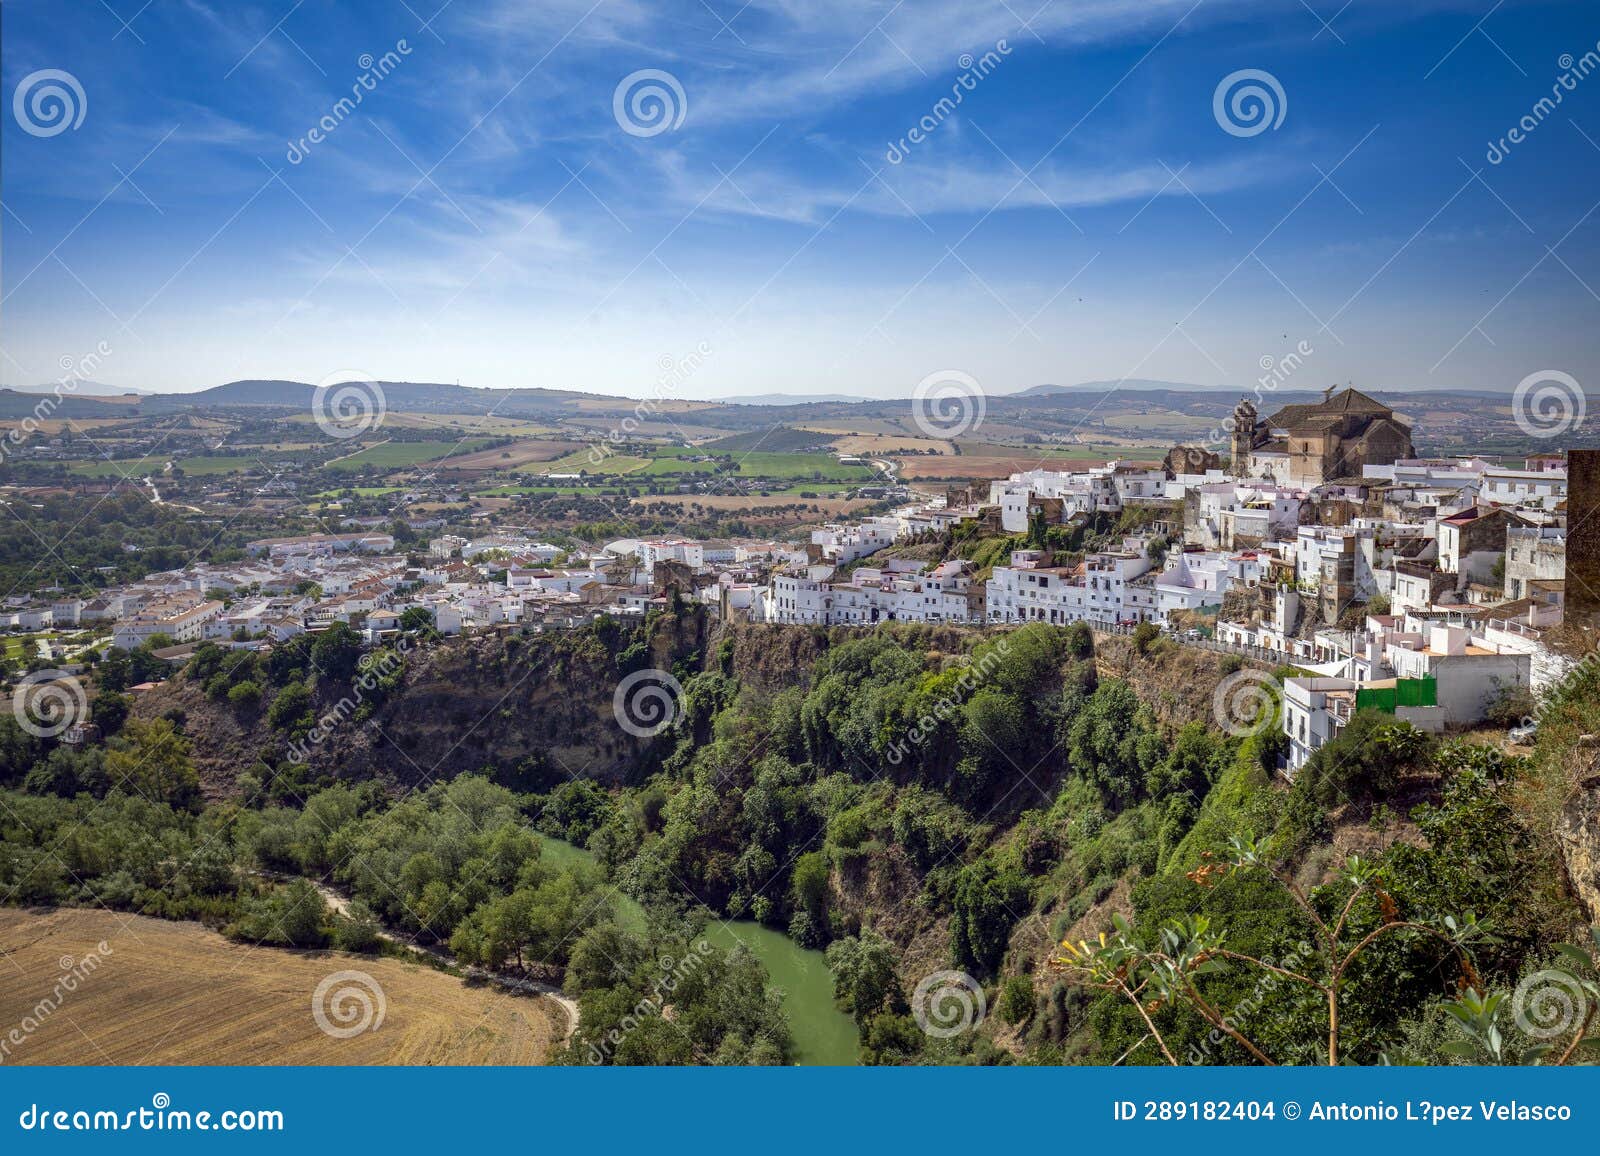 view of the white village of arcos de la frontera, cÃ¡diz, andalusia, spain